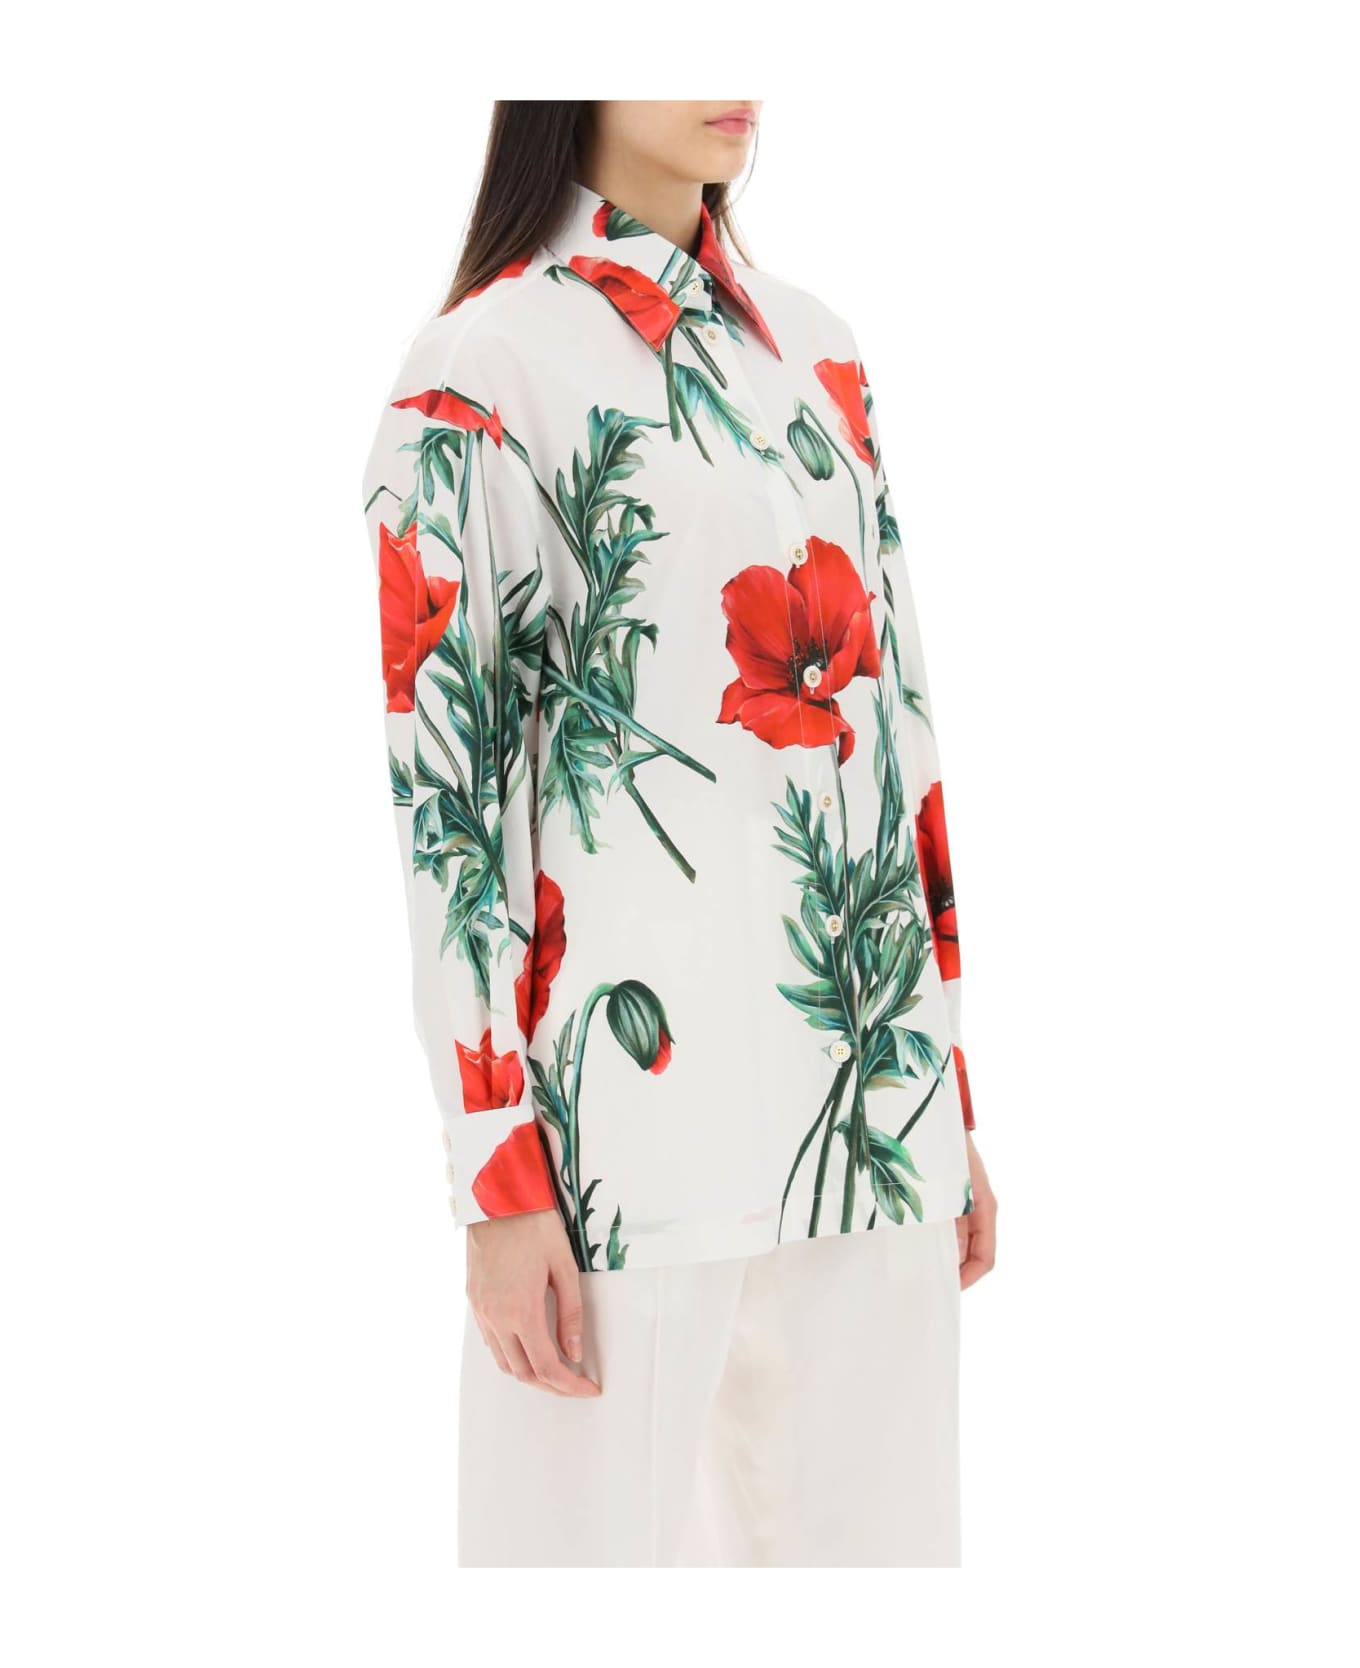 Dolce & Gabbana Poppy Print Poplin Shirt - Multicolor